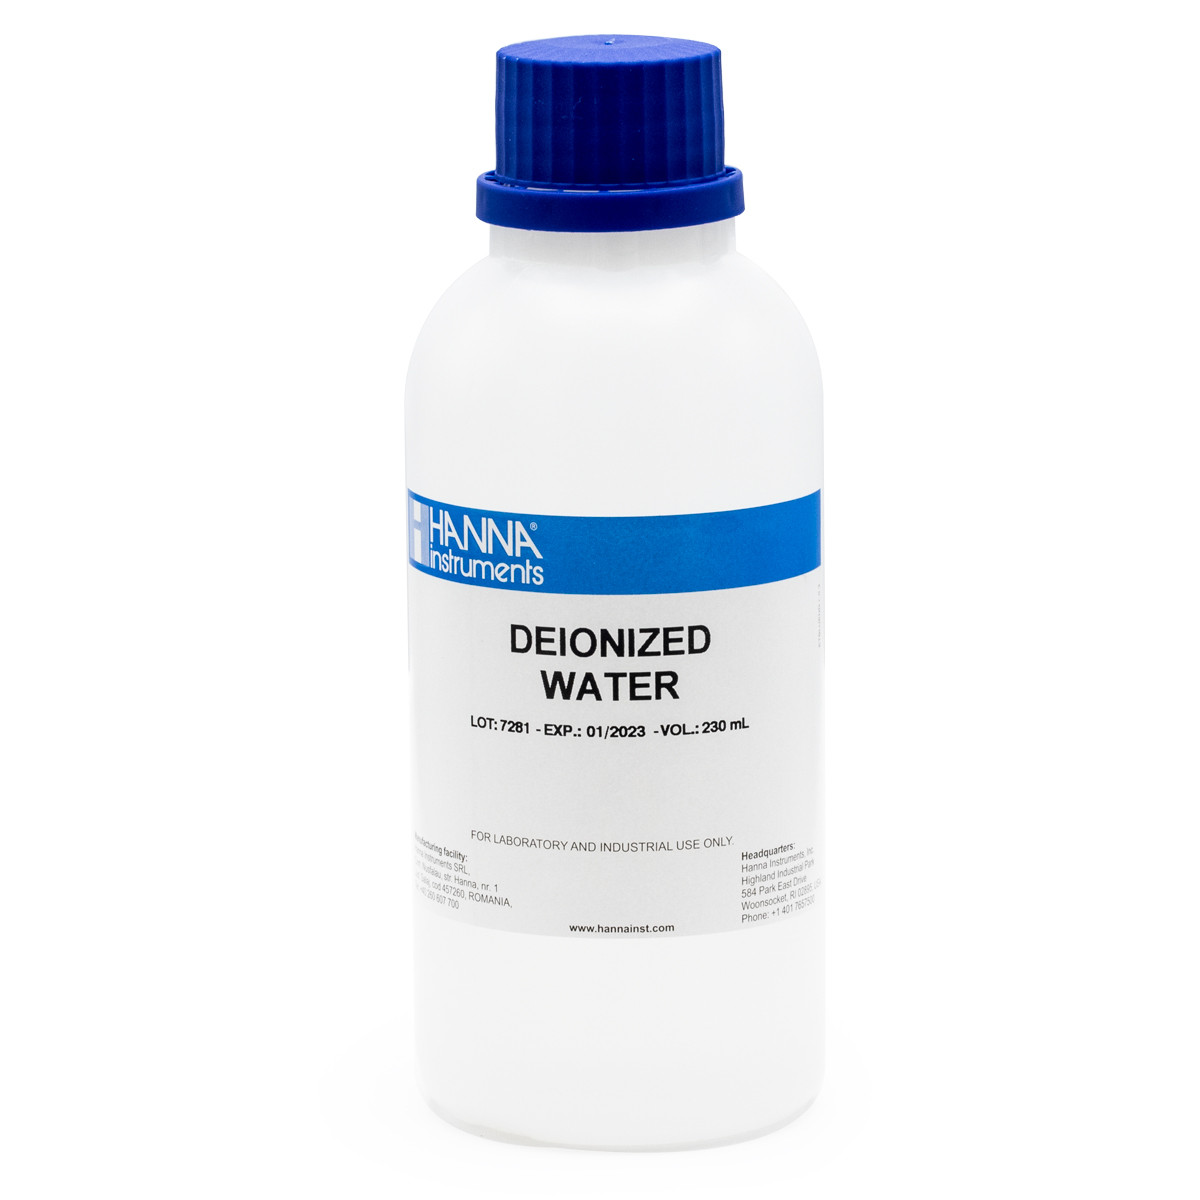 Deionized Water, 230 mL bottle